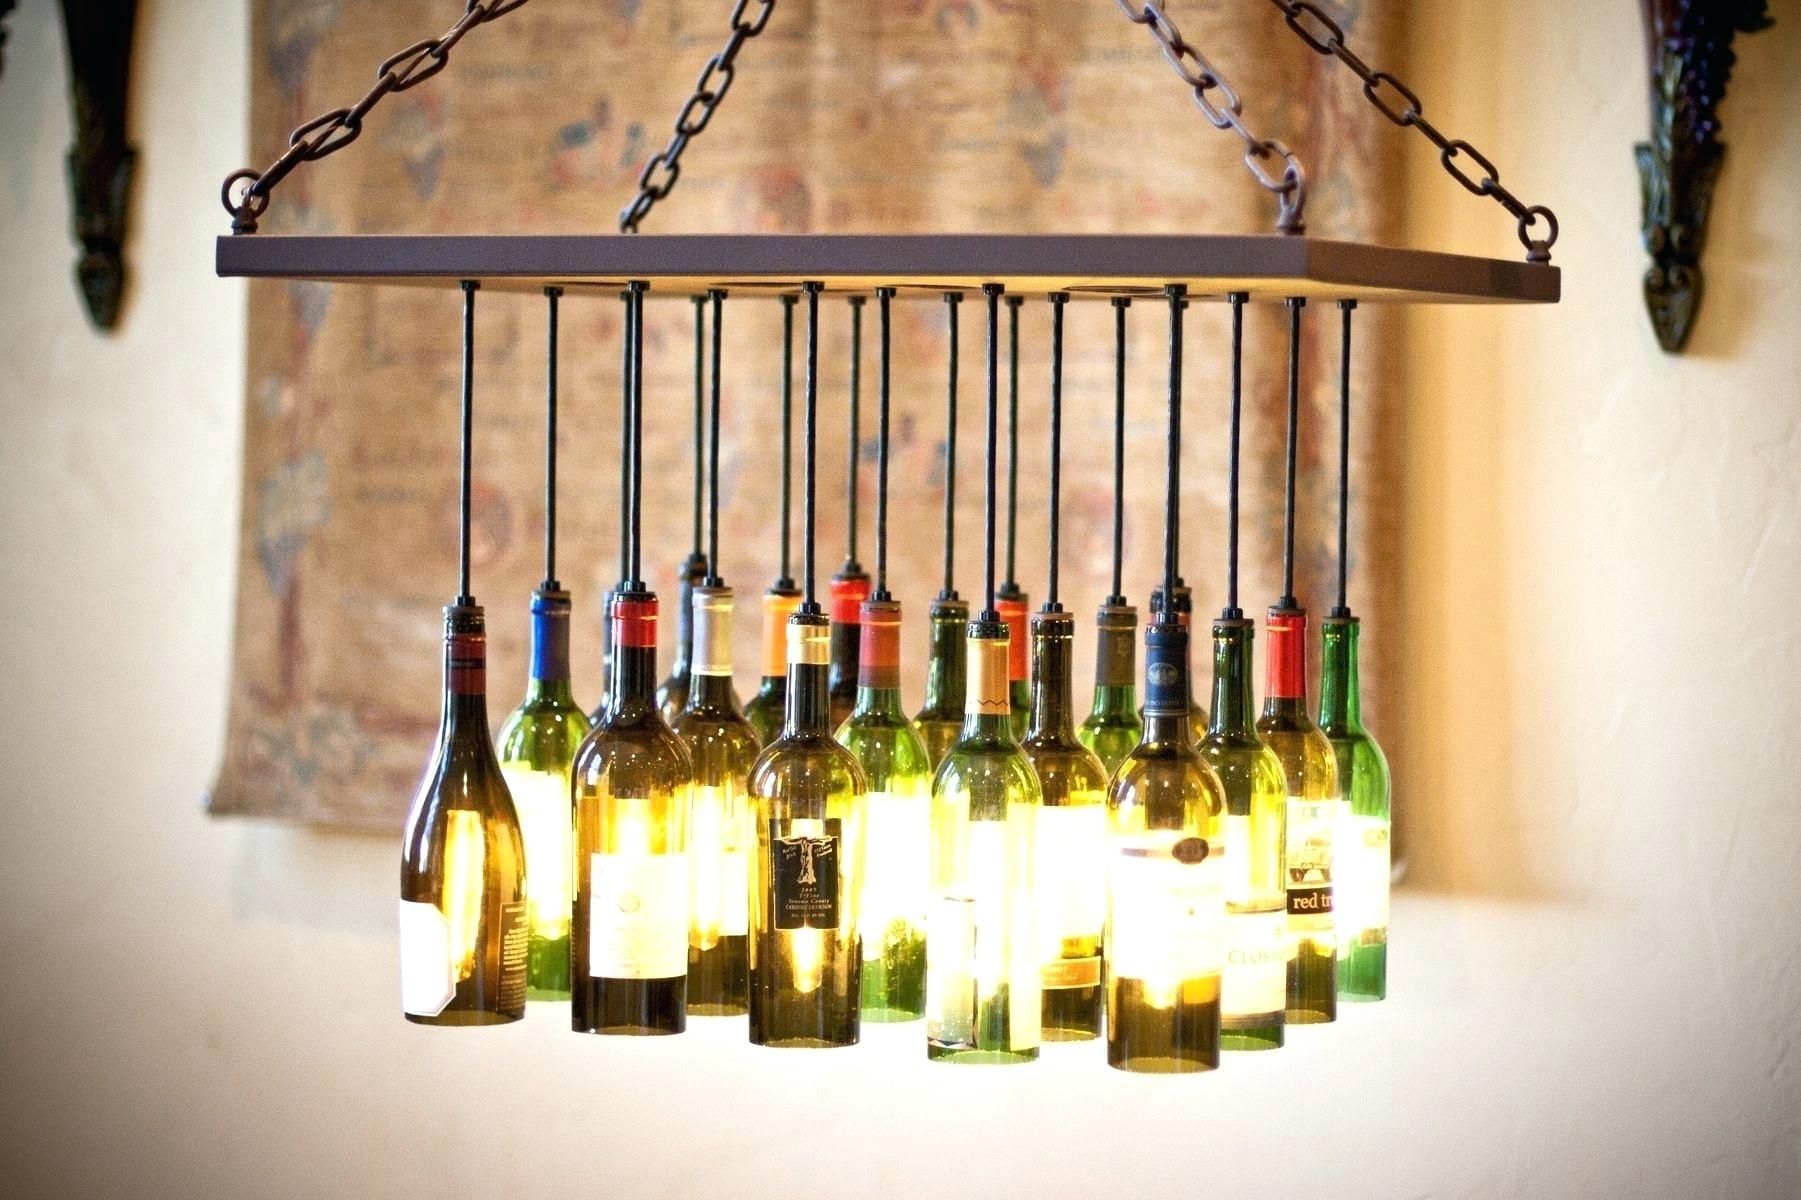 How To Make Wine Bottle Lights Made Diy Garden Hanging Pinterest Inside Making Outdoor Hanging Lights From Wine Bottles (View 15 of 15)